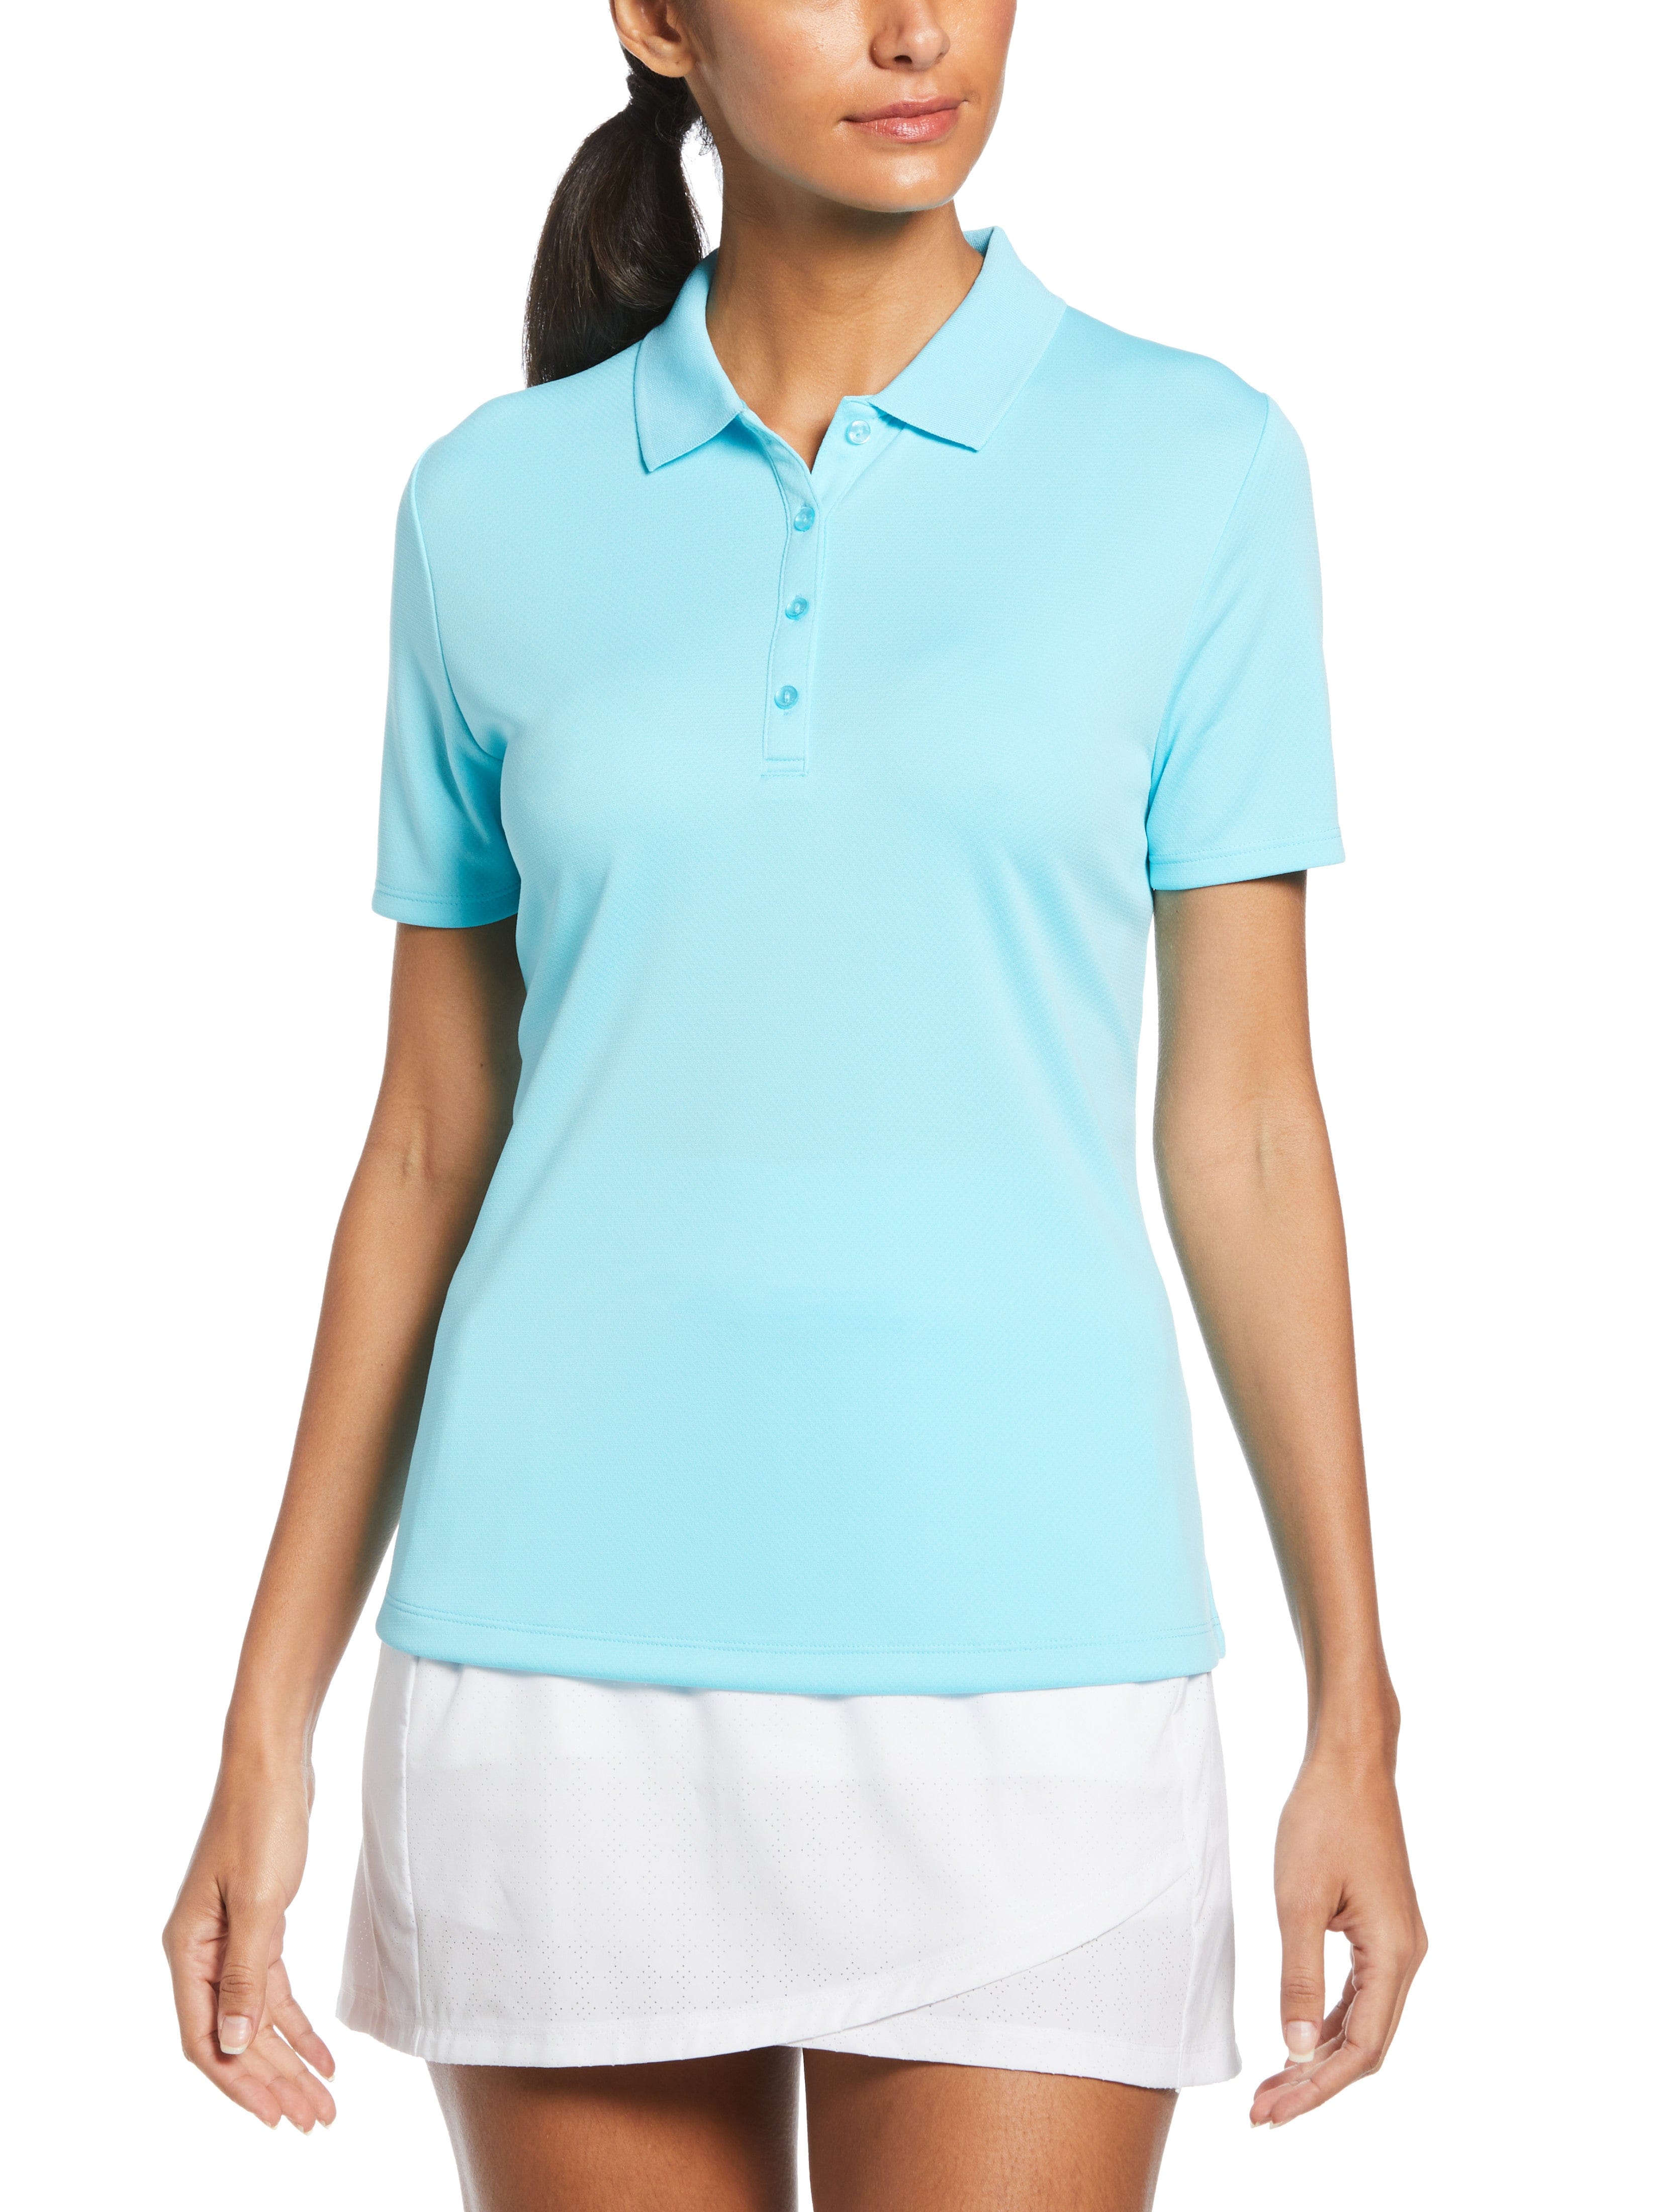 Callaway Apparel Womens Swing Tech™ Solid Polo Shirt, Size Small, Santorini Blue, 100% Polyester | Golf Apparel Shop